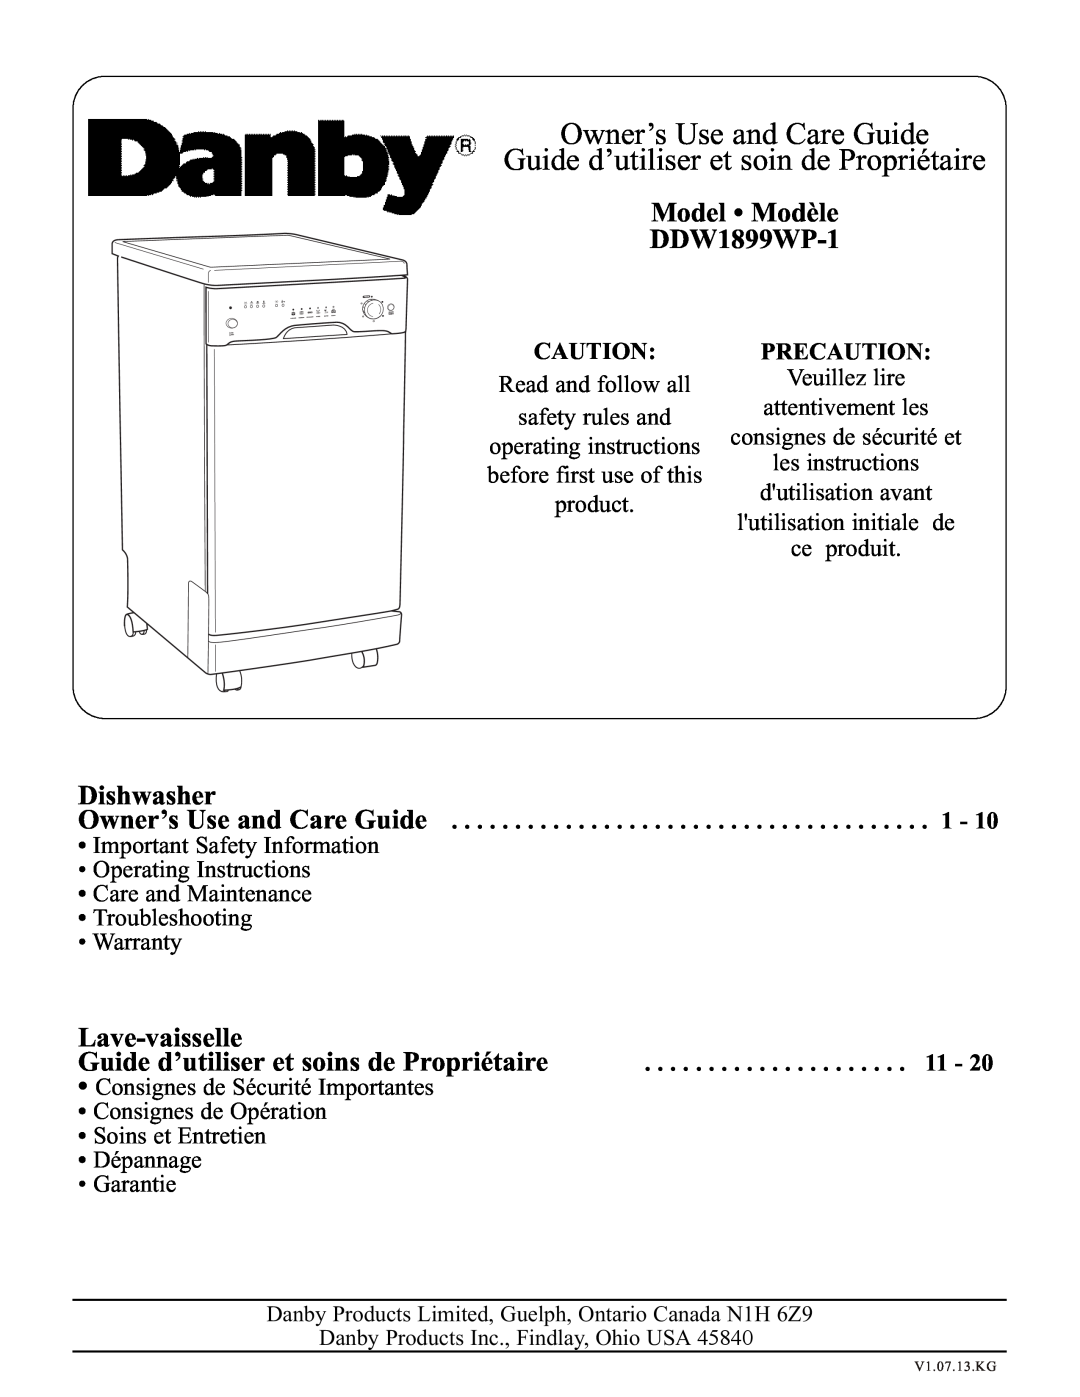 Danby DDW1899WP-1 operating instructions Precaution, Owner’s Use and Care Guide Guide d’utiliser et soin de Propriétaire 